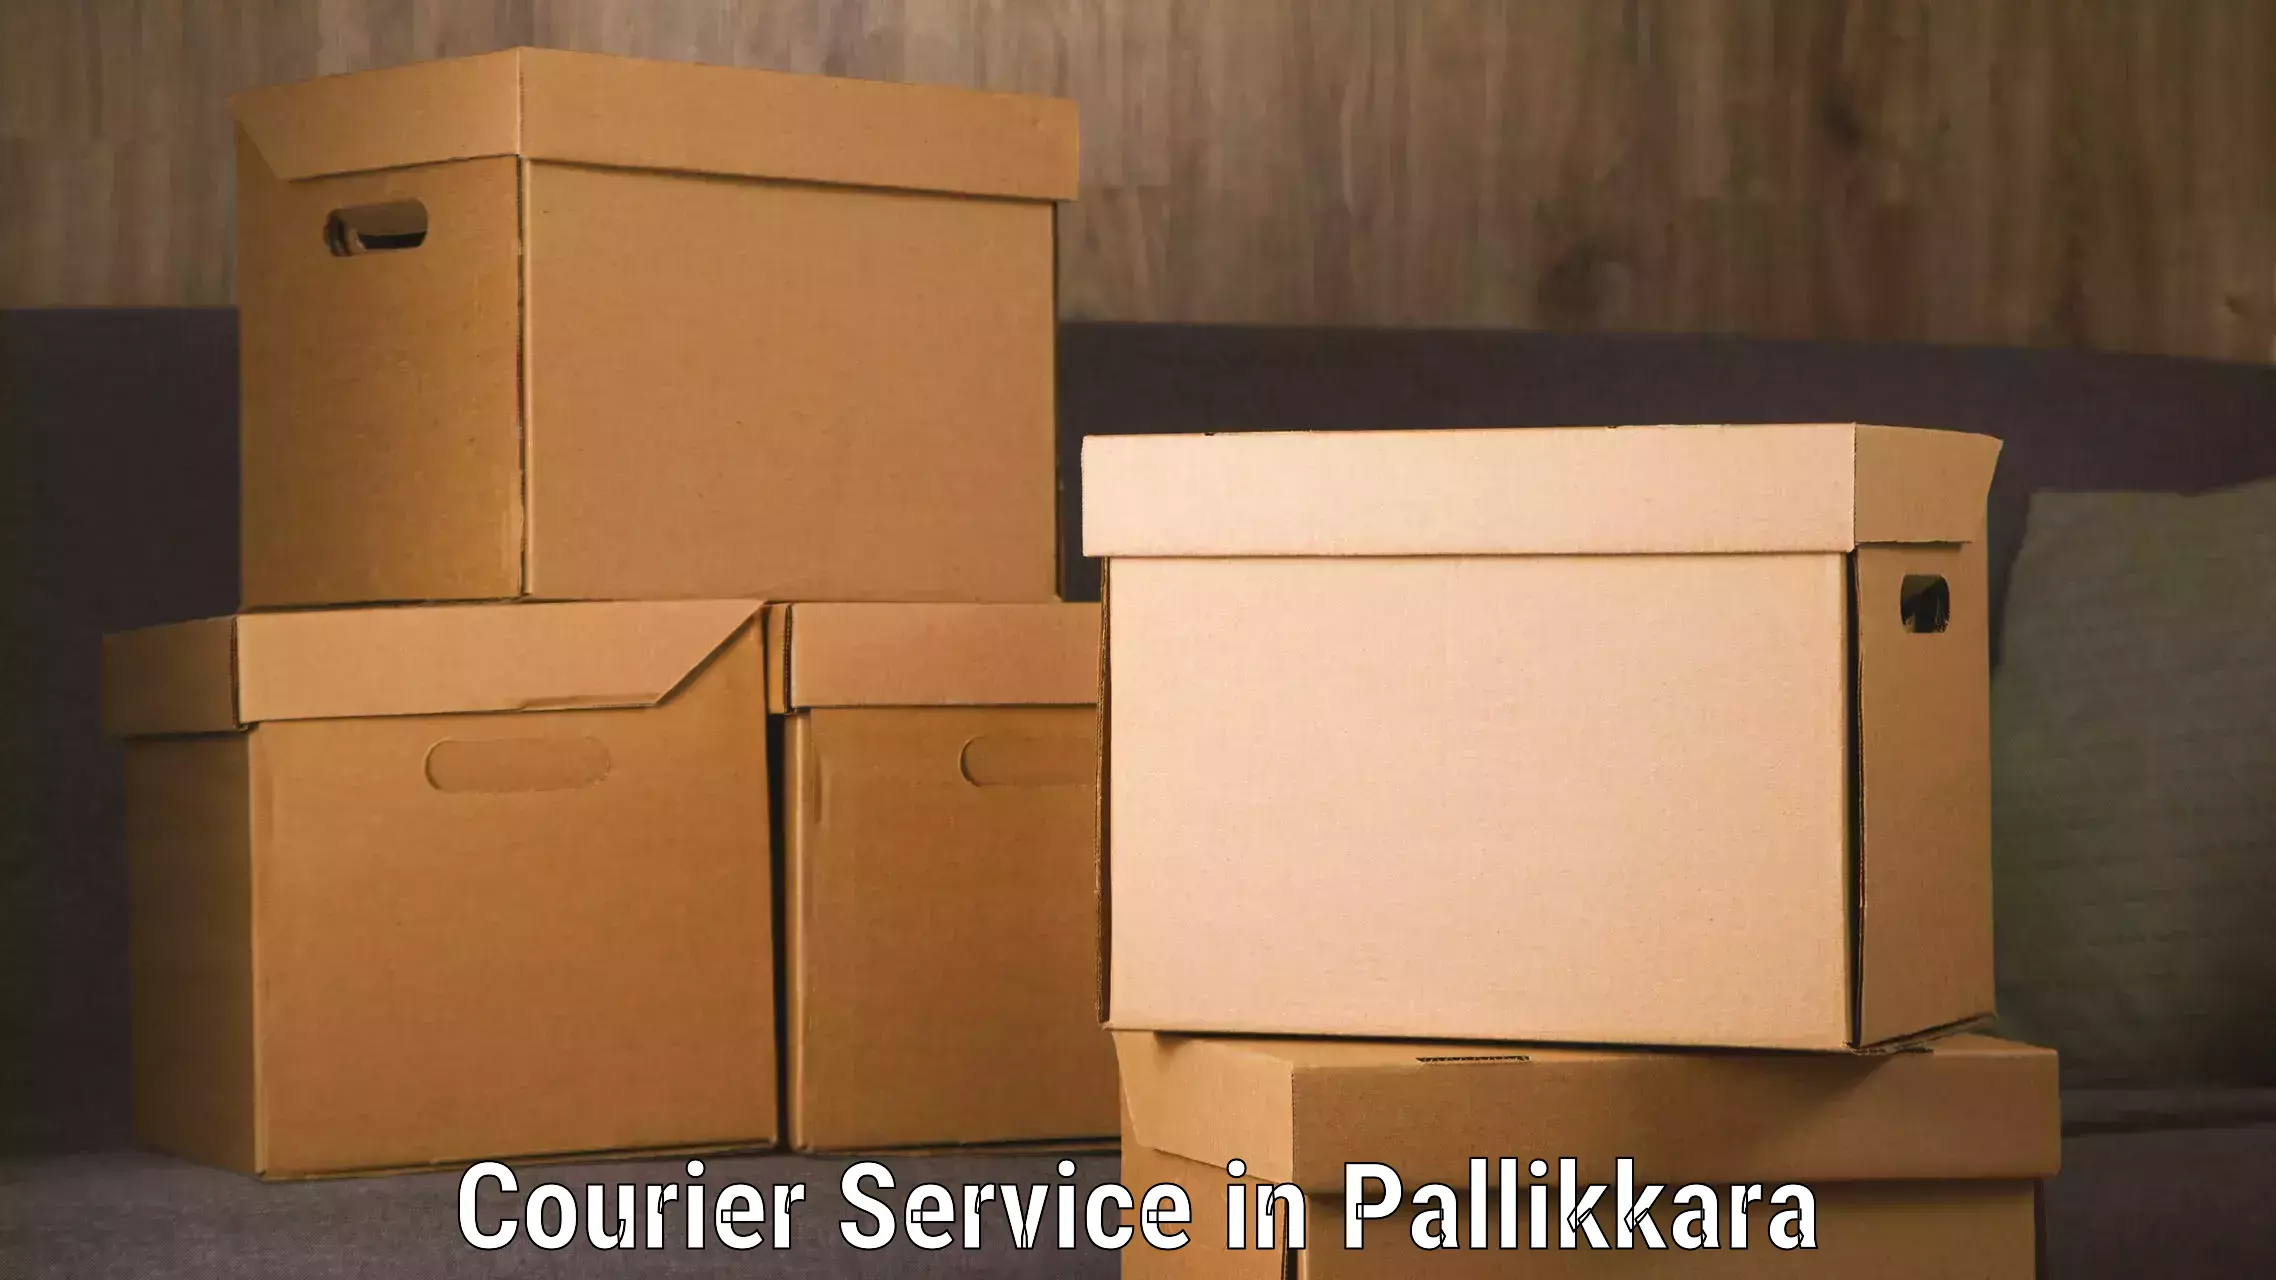 Parcel service for businesses in Pallikkara